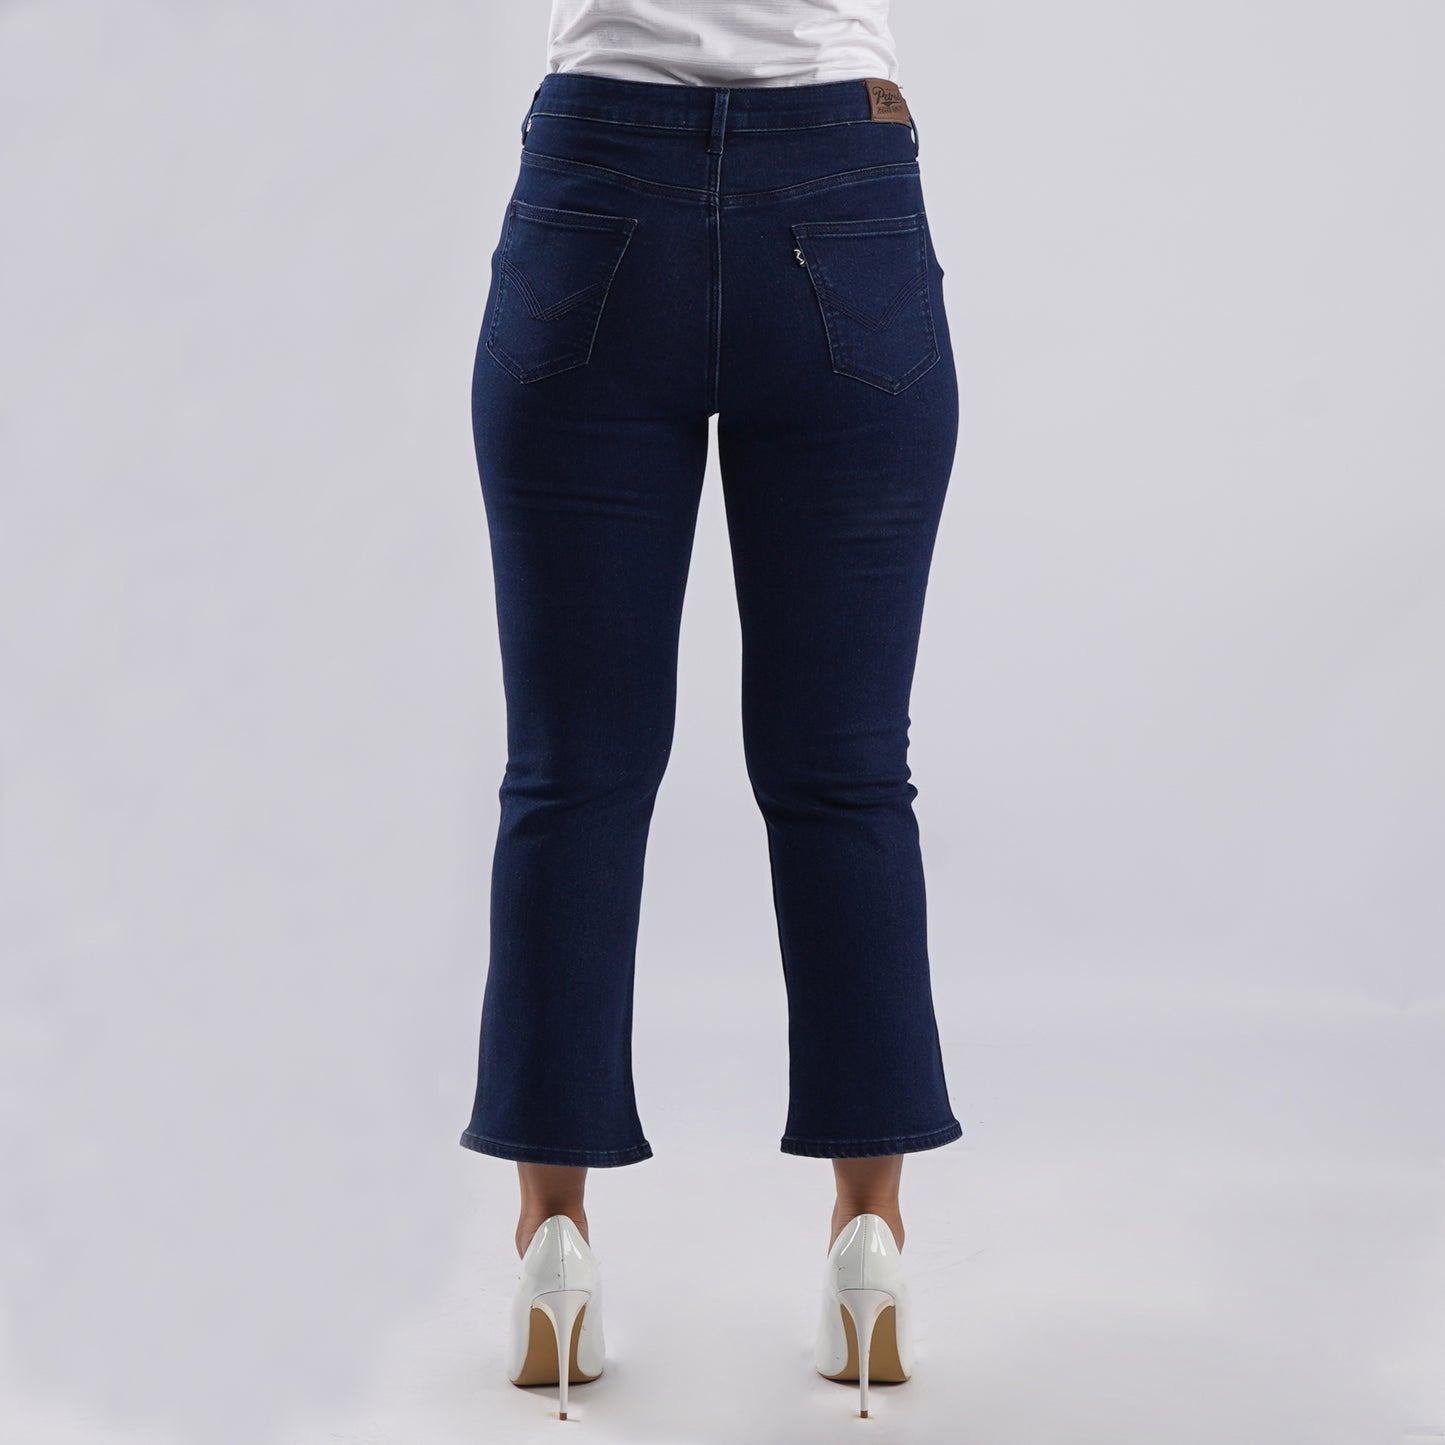 Petrol Ladies Basic Denim Boyfriend Jeans for Women Trendy Fashion High Quality Apparel Comfortable Casual Pants for Women Mid waist 150139 (Dark Shade)